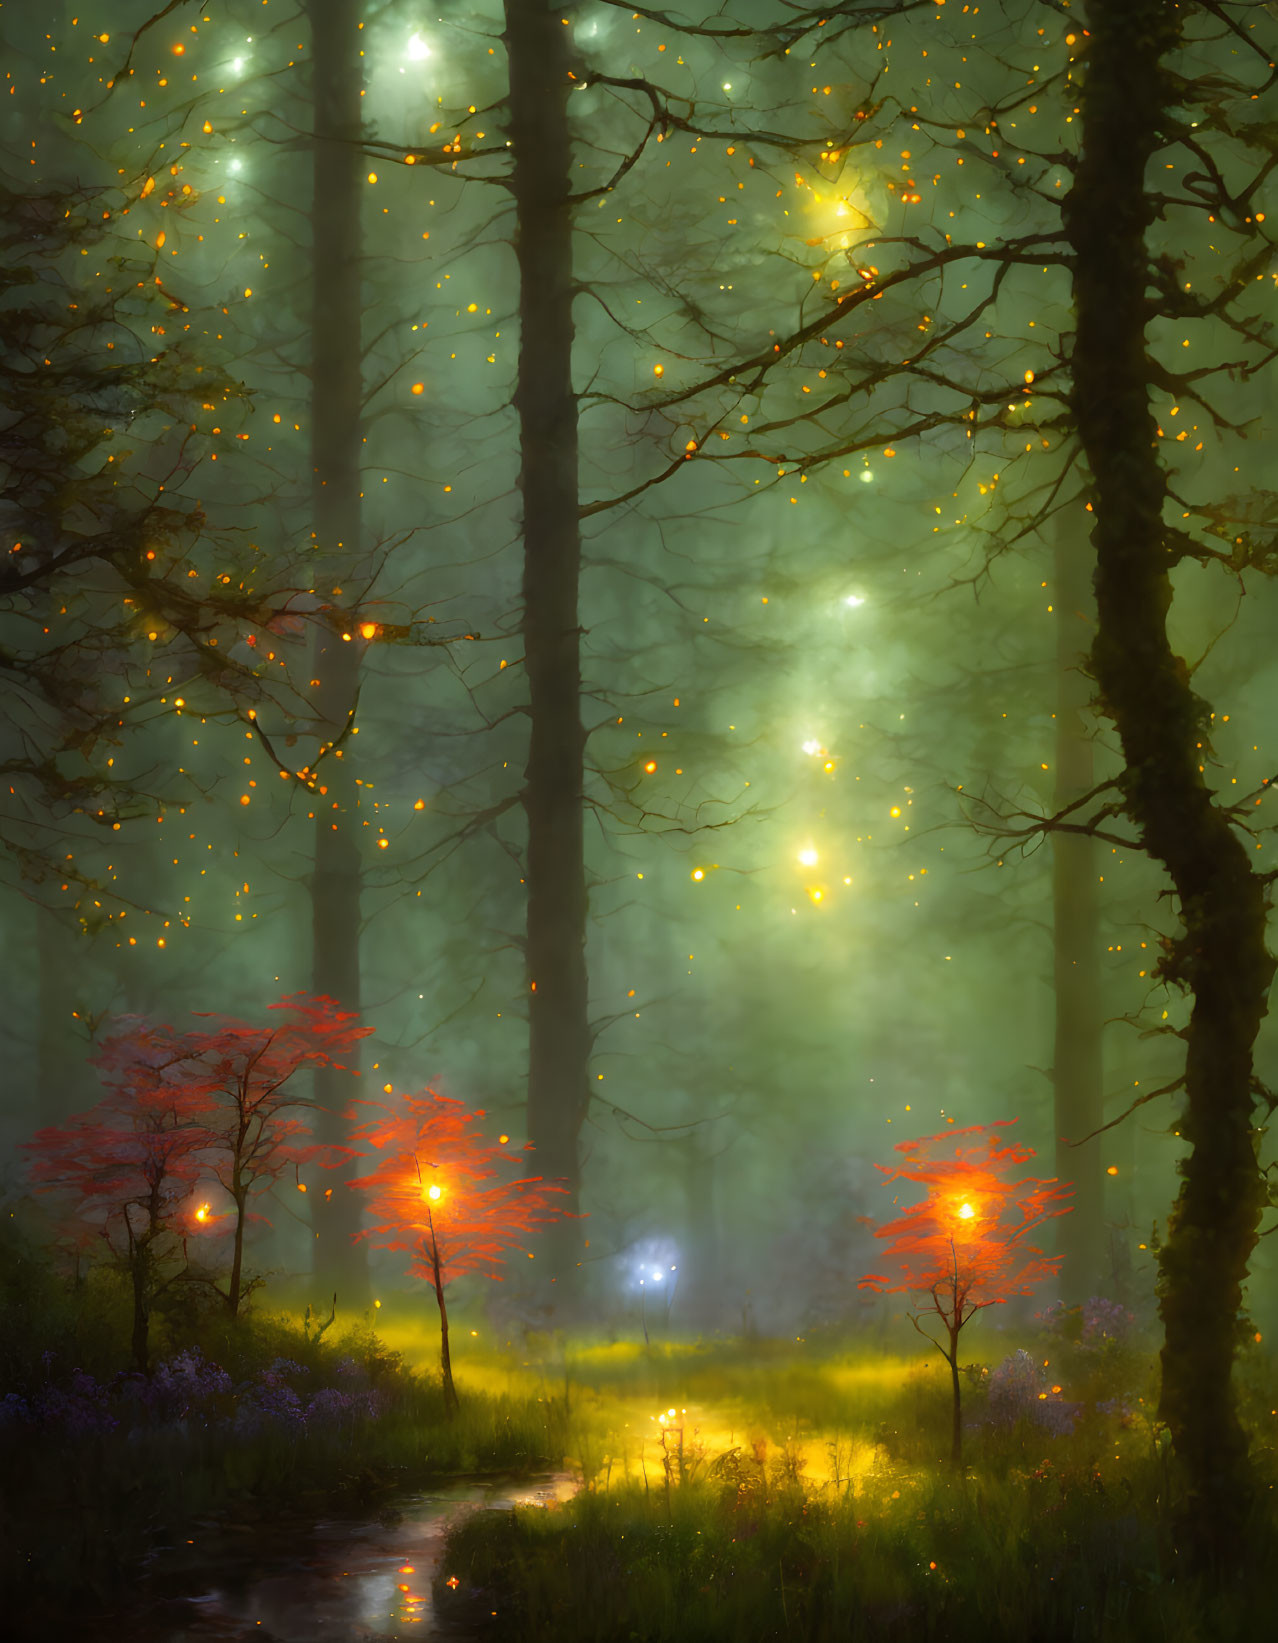 Fireflies in Fairyland